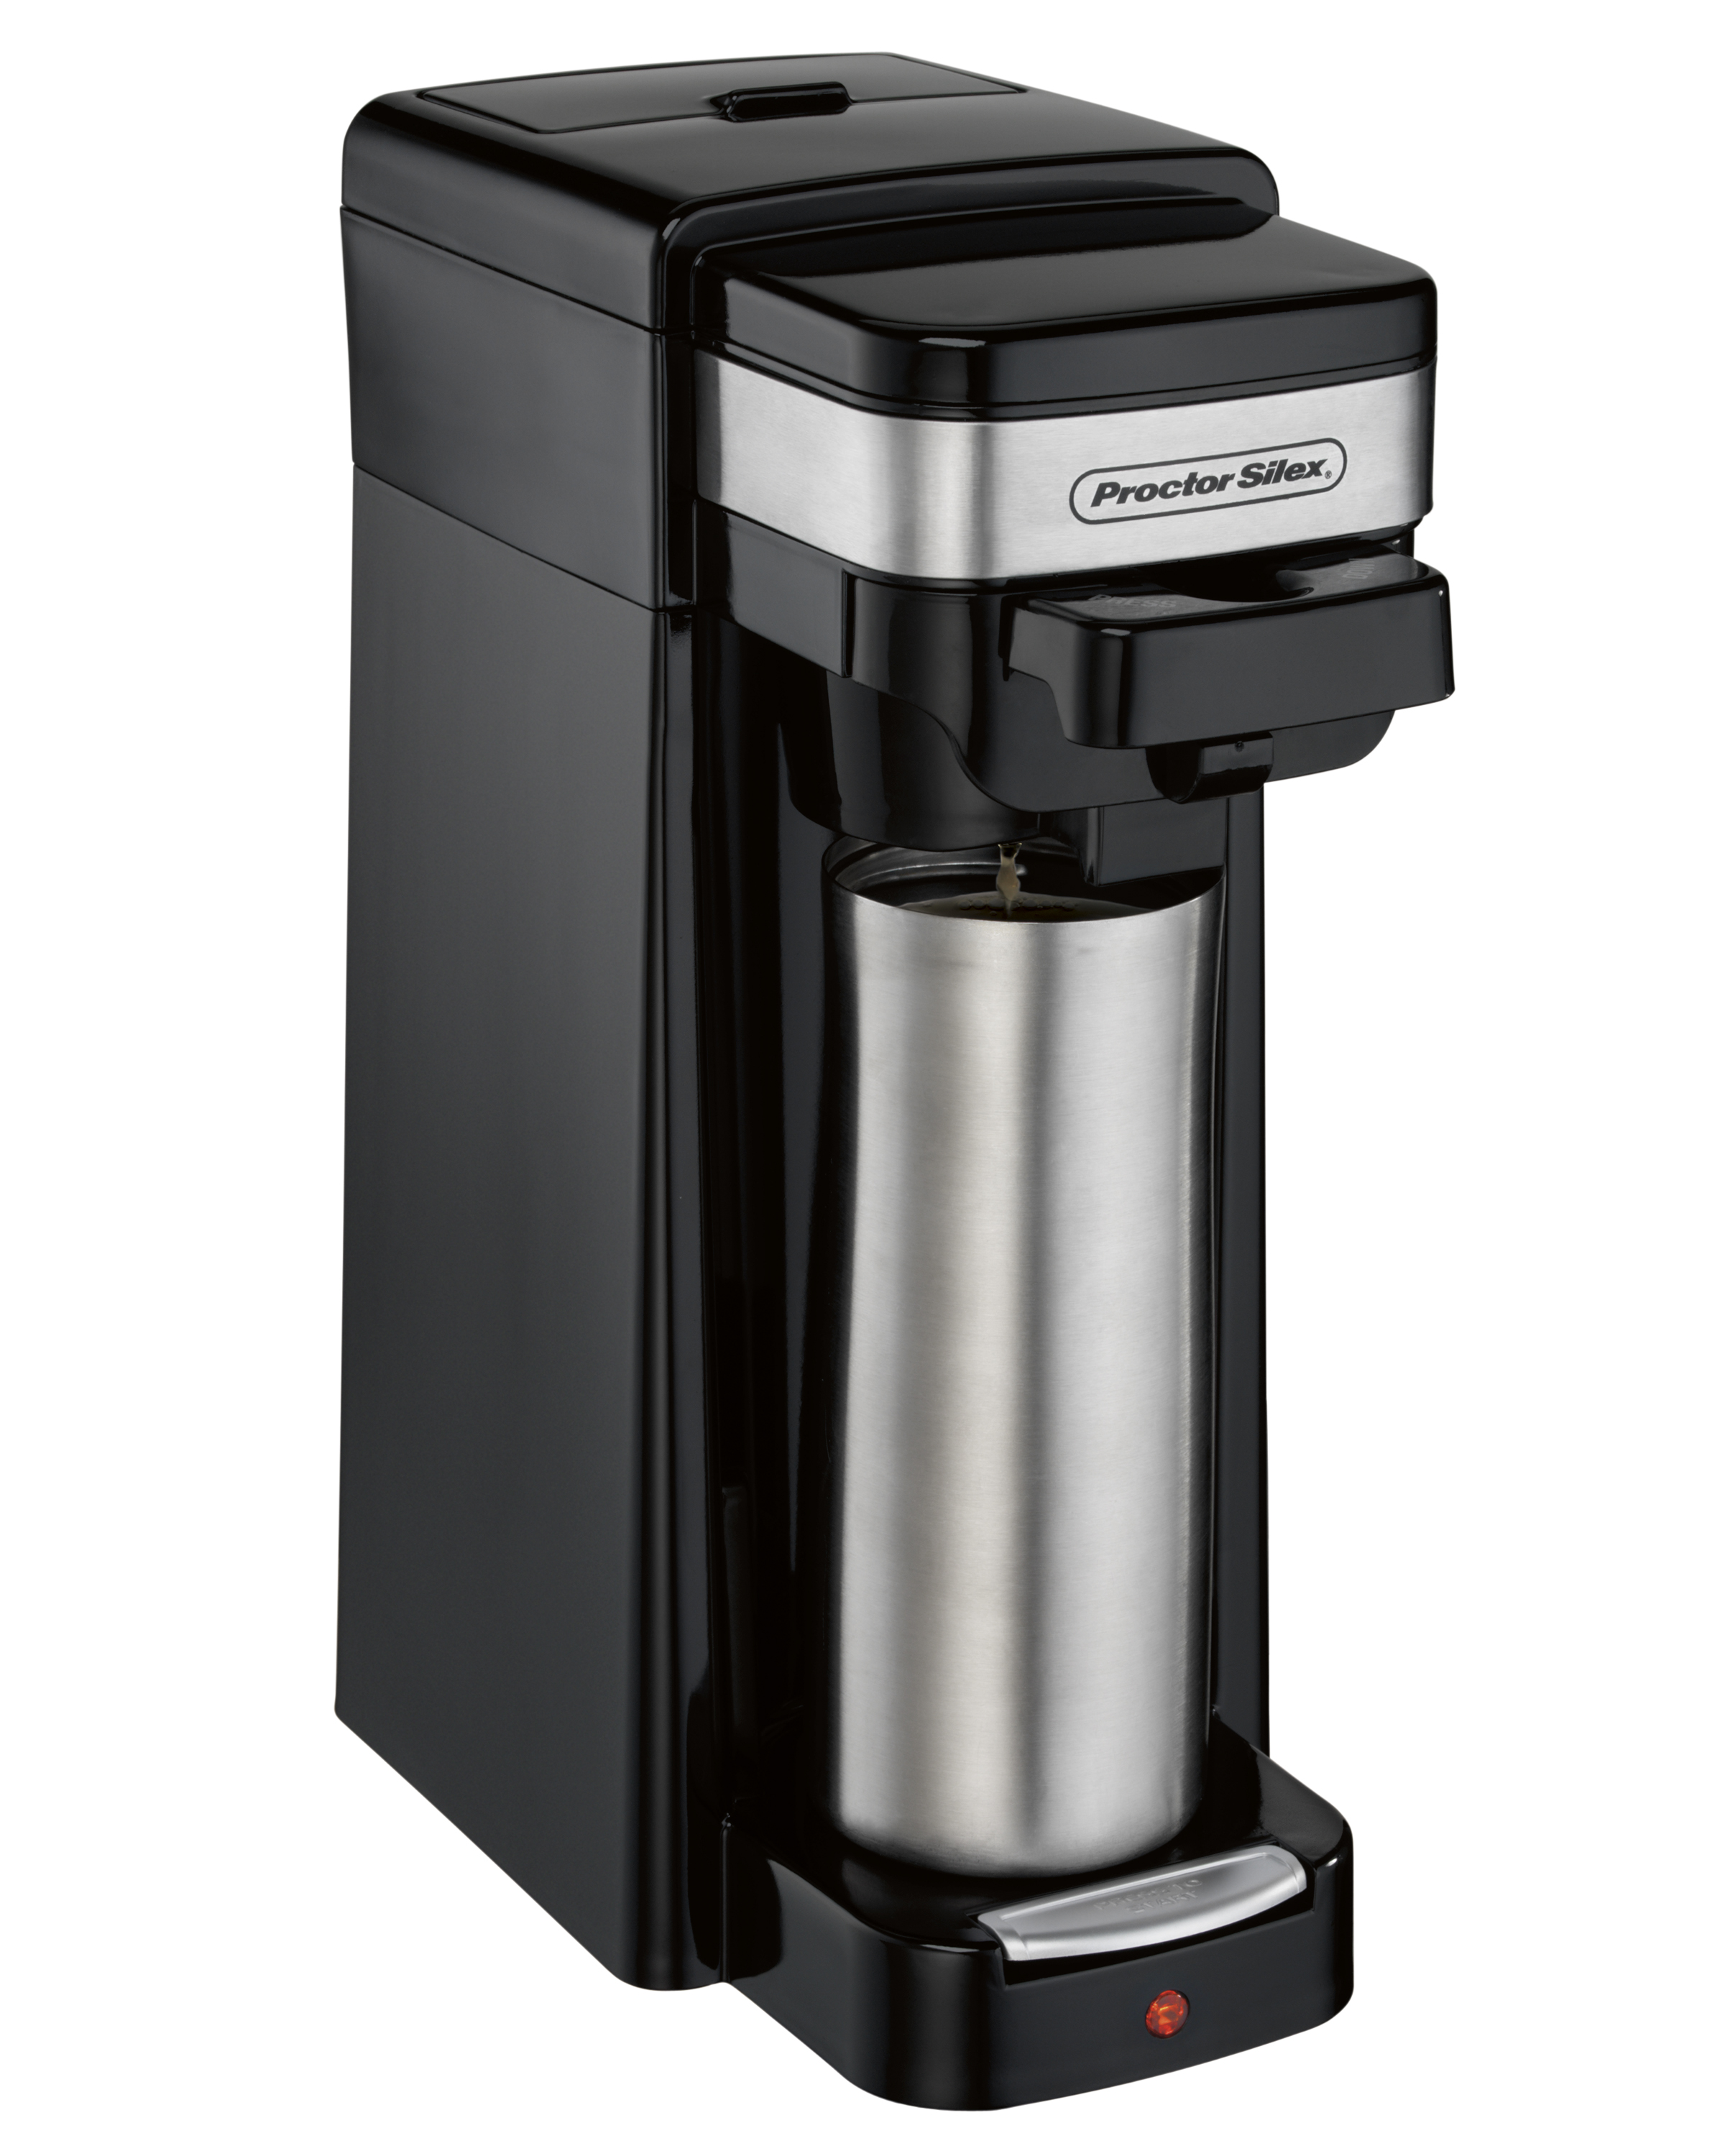 Proctor Silex 49969 Single-Serve Coffee Maker - Black